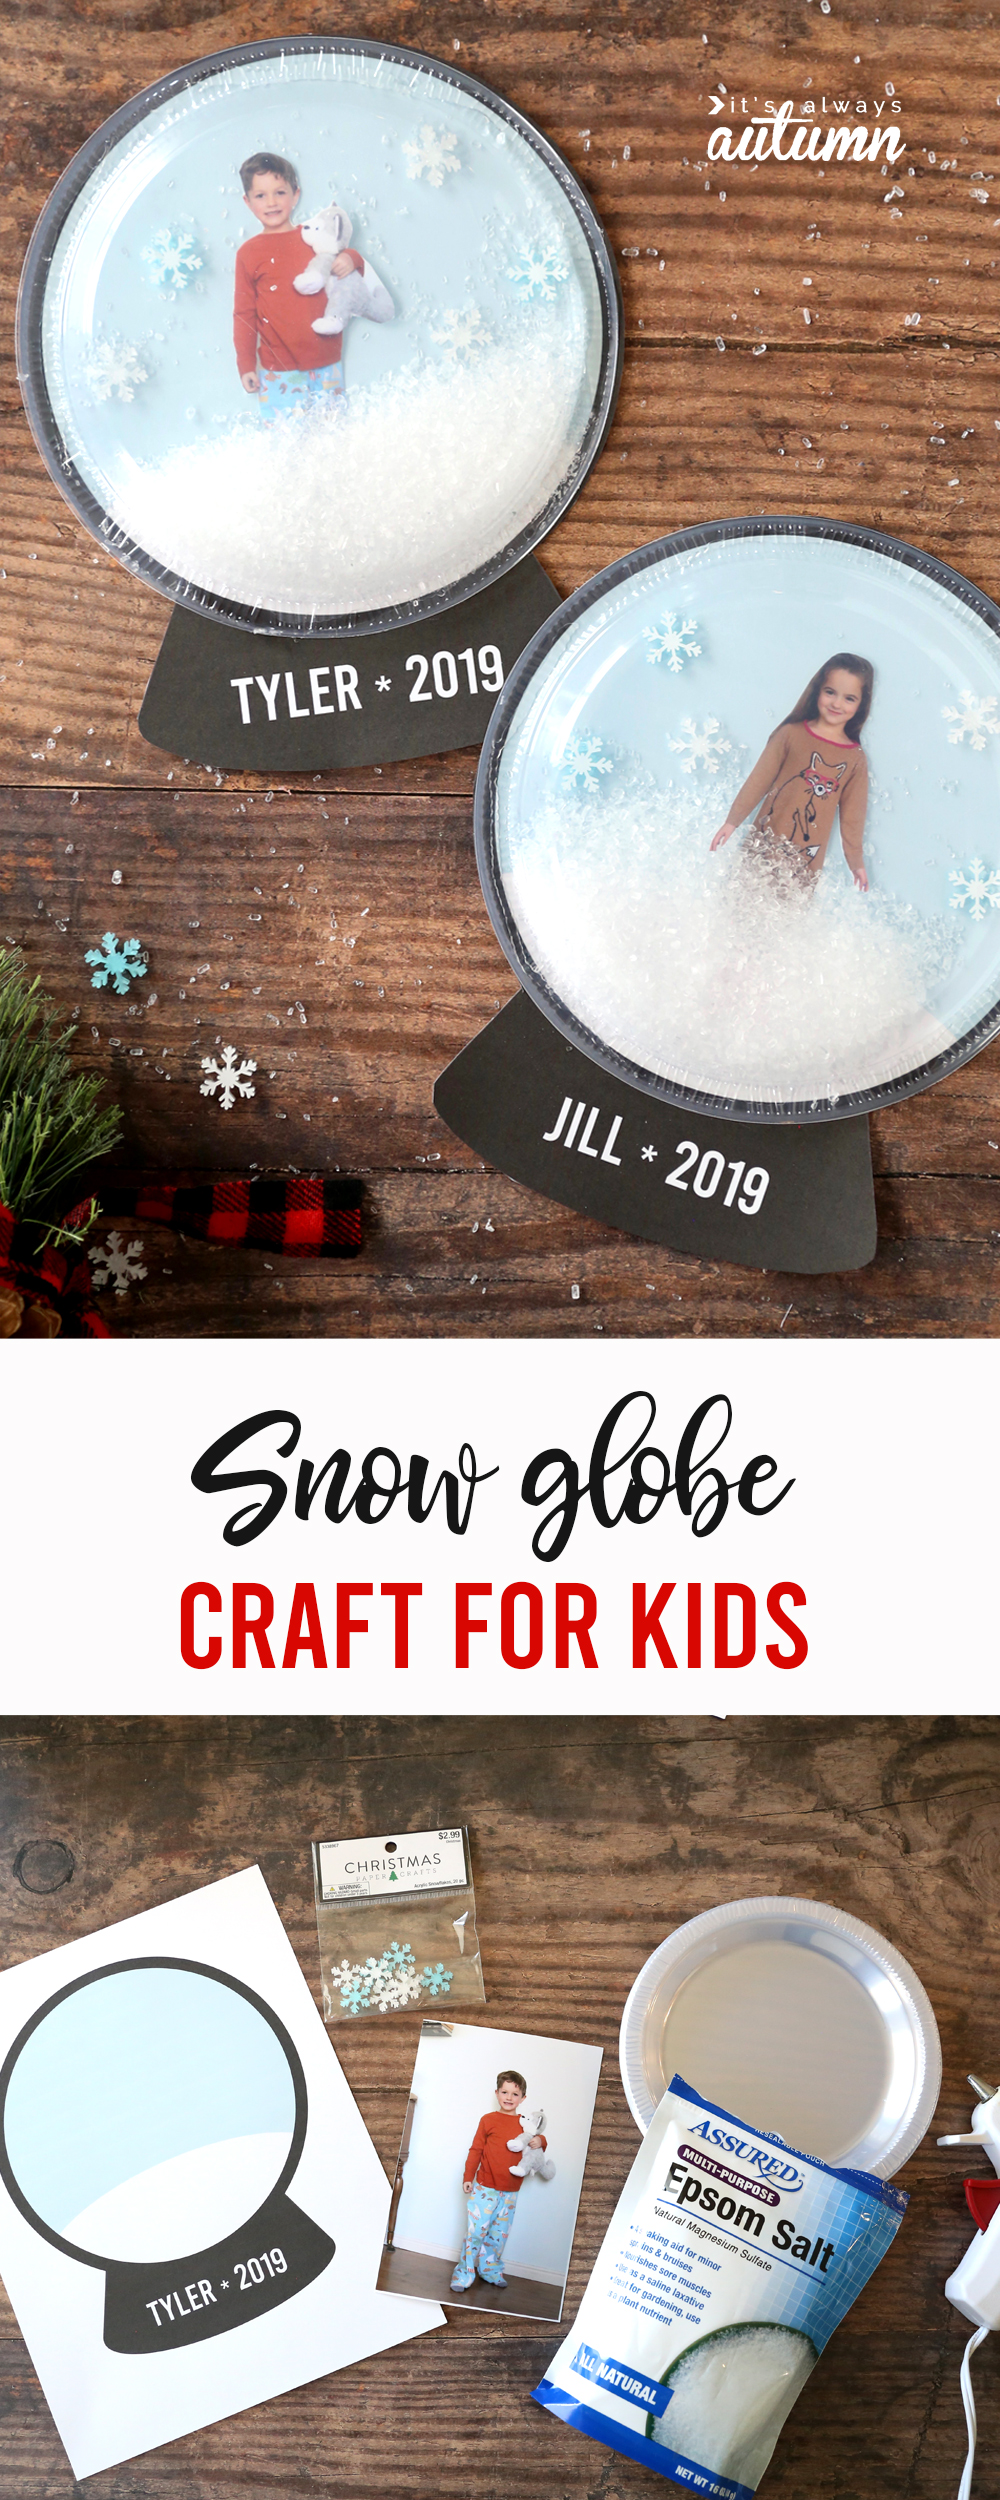 Cute photo snow globe craft for kids! Fun winter kids craft idea.